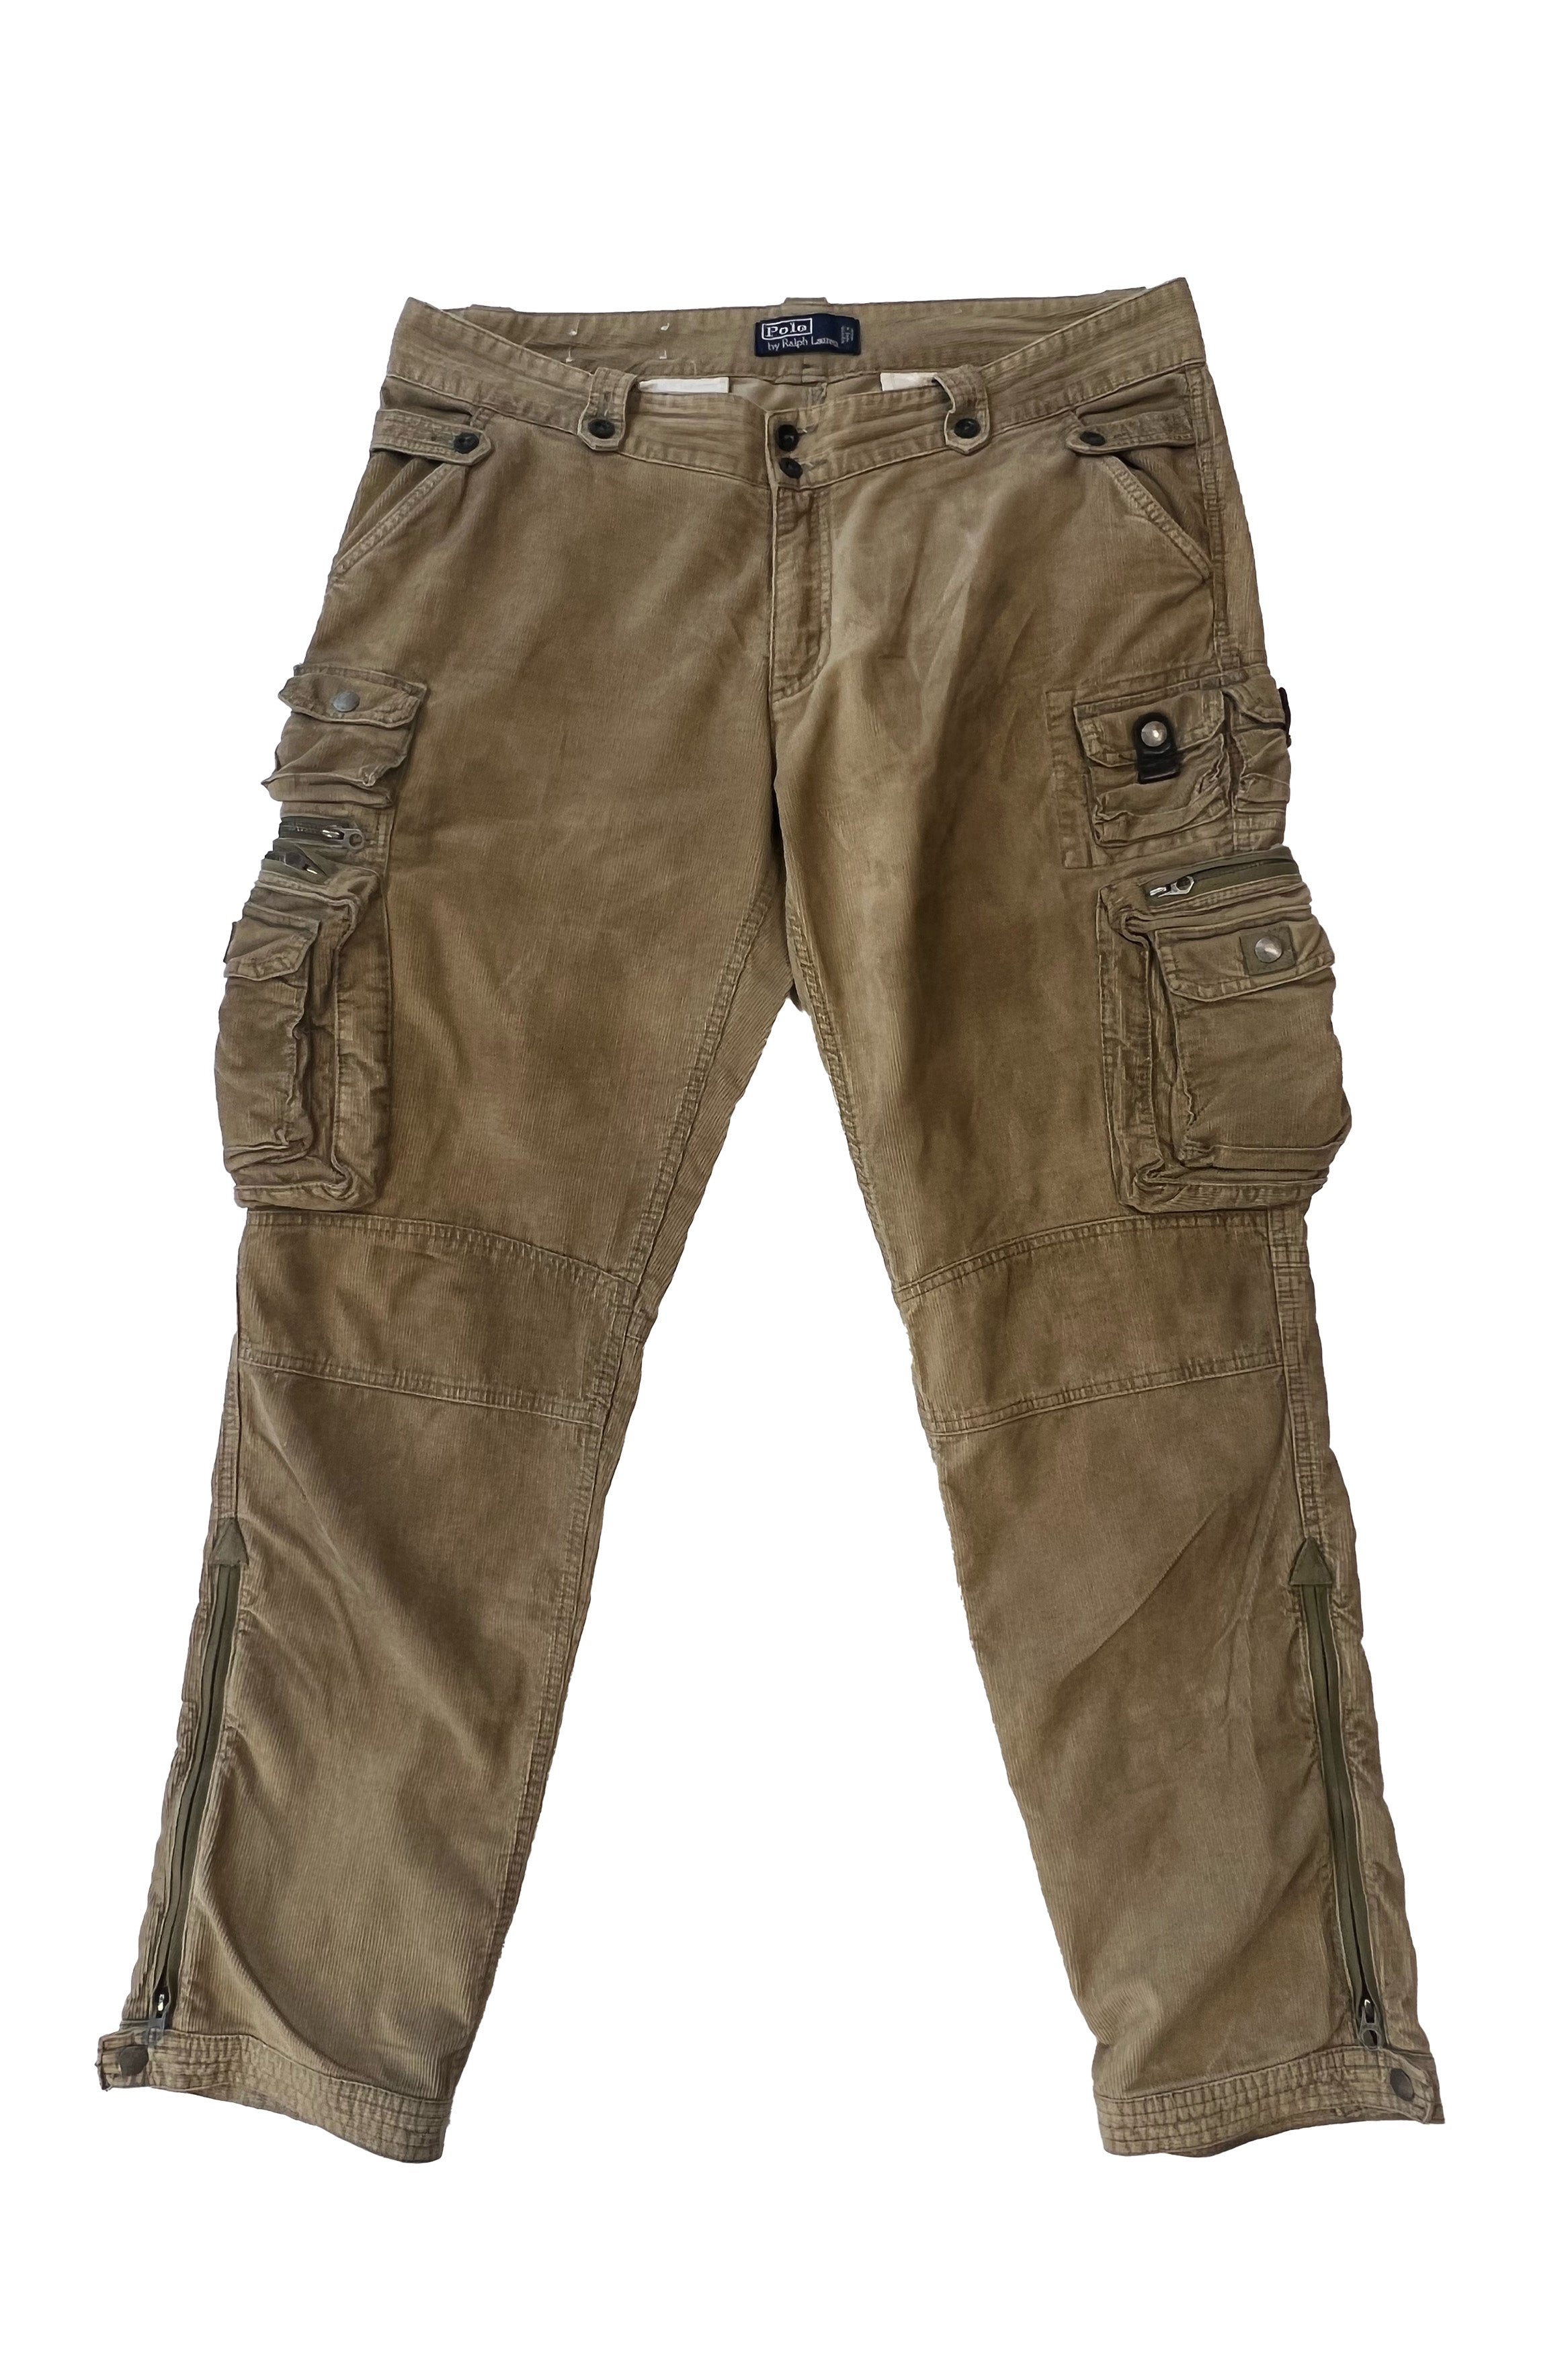 Vintage Polo Ralph Lauren Corduroy Military Style Cargo Pants